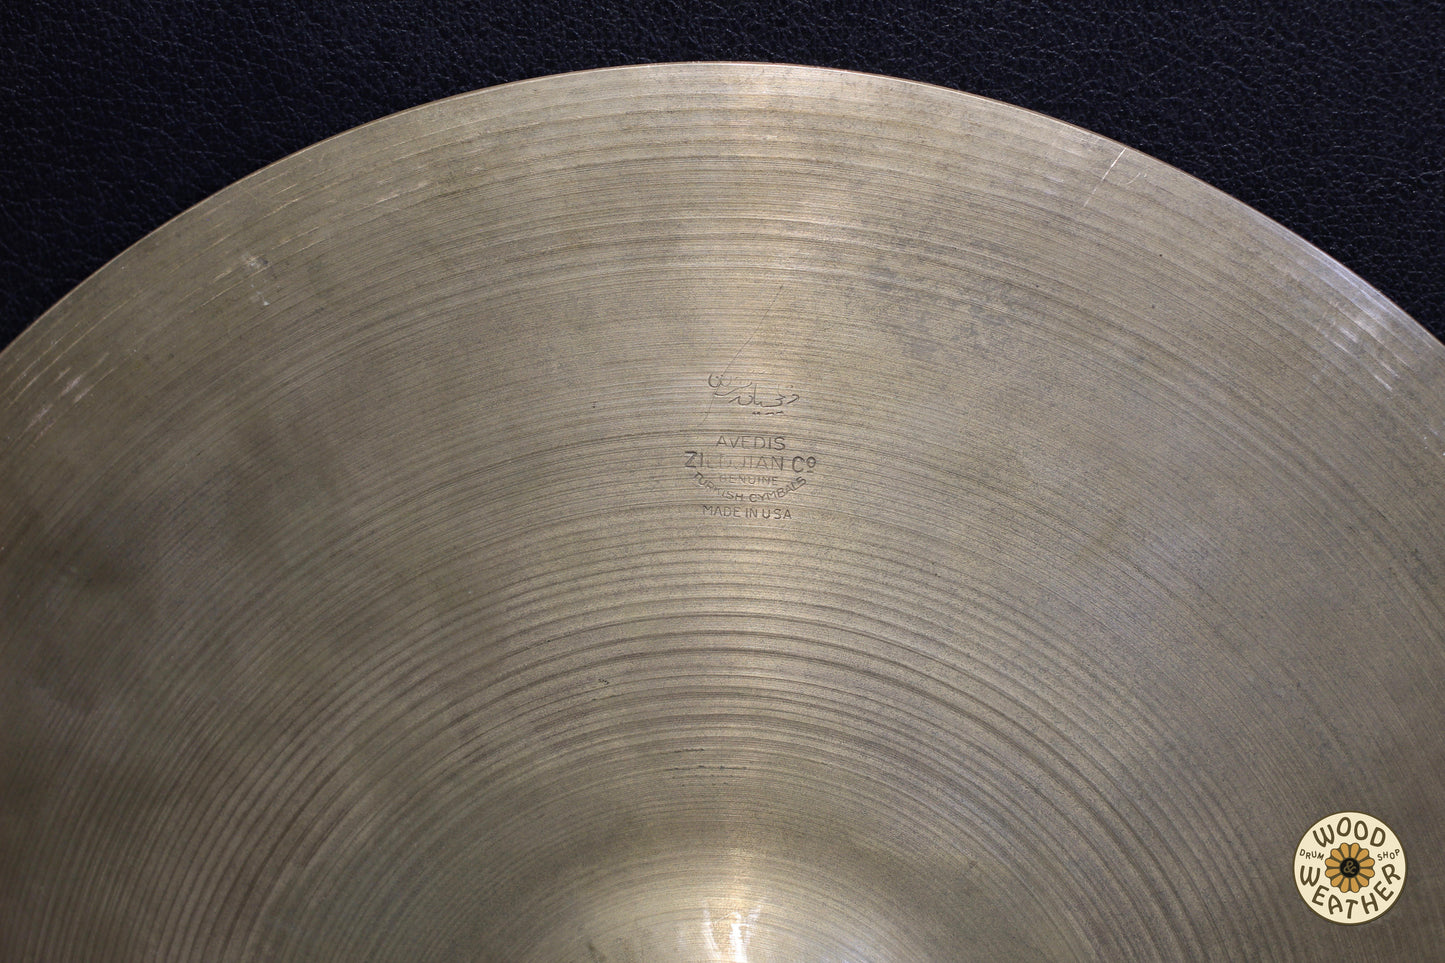 1950s A. Zildjian 15" Hi-Hat Cymbals 915/1190g